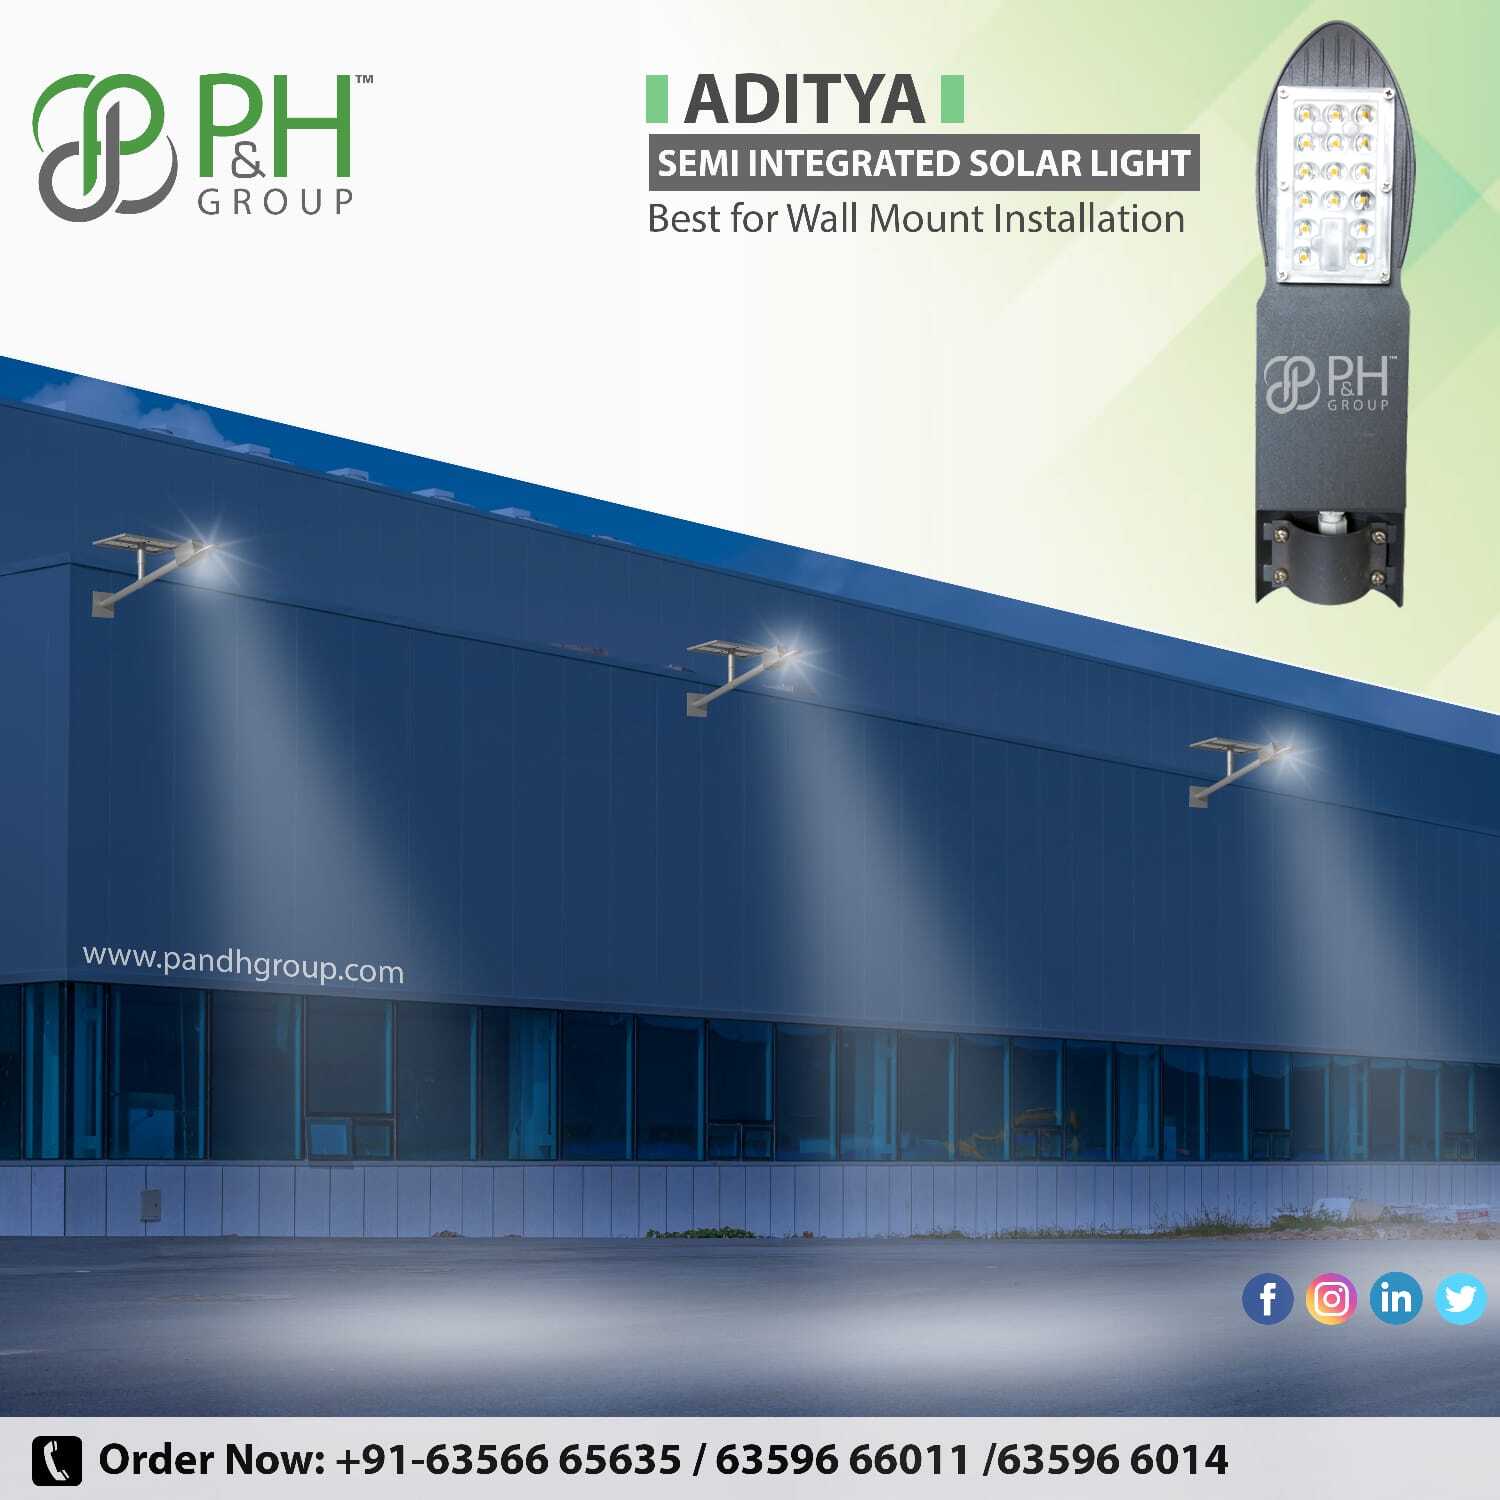 18w Semi integrated Solar Lighting System - Aditya model